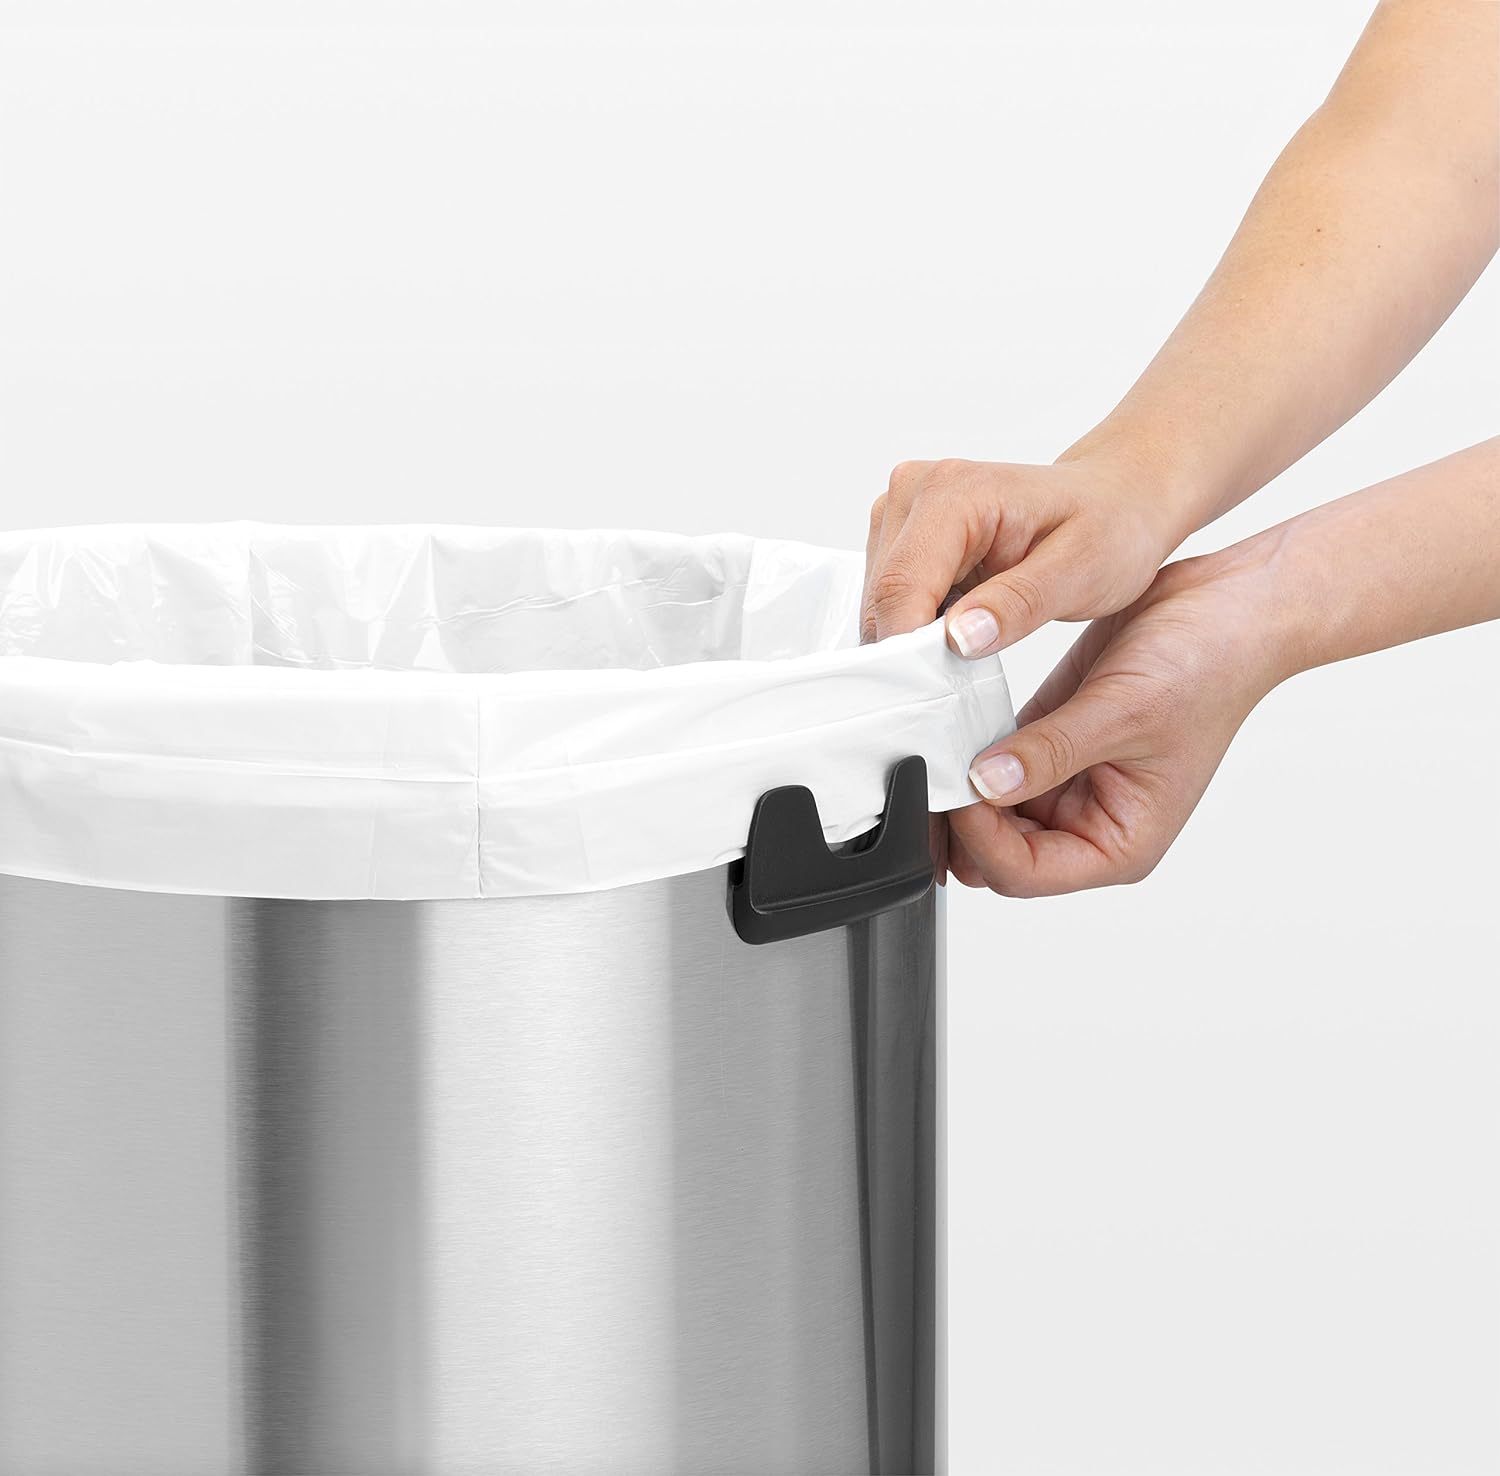 Touch bin, SilverCapacity: 60 liter